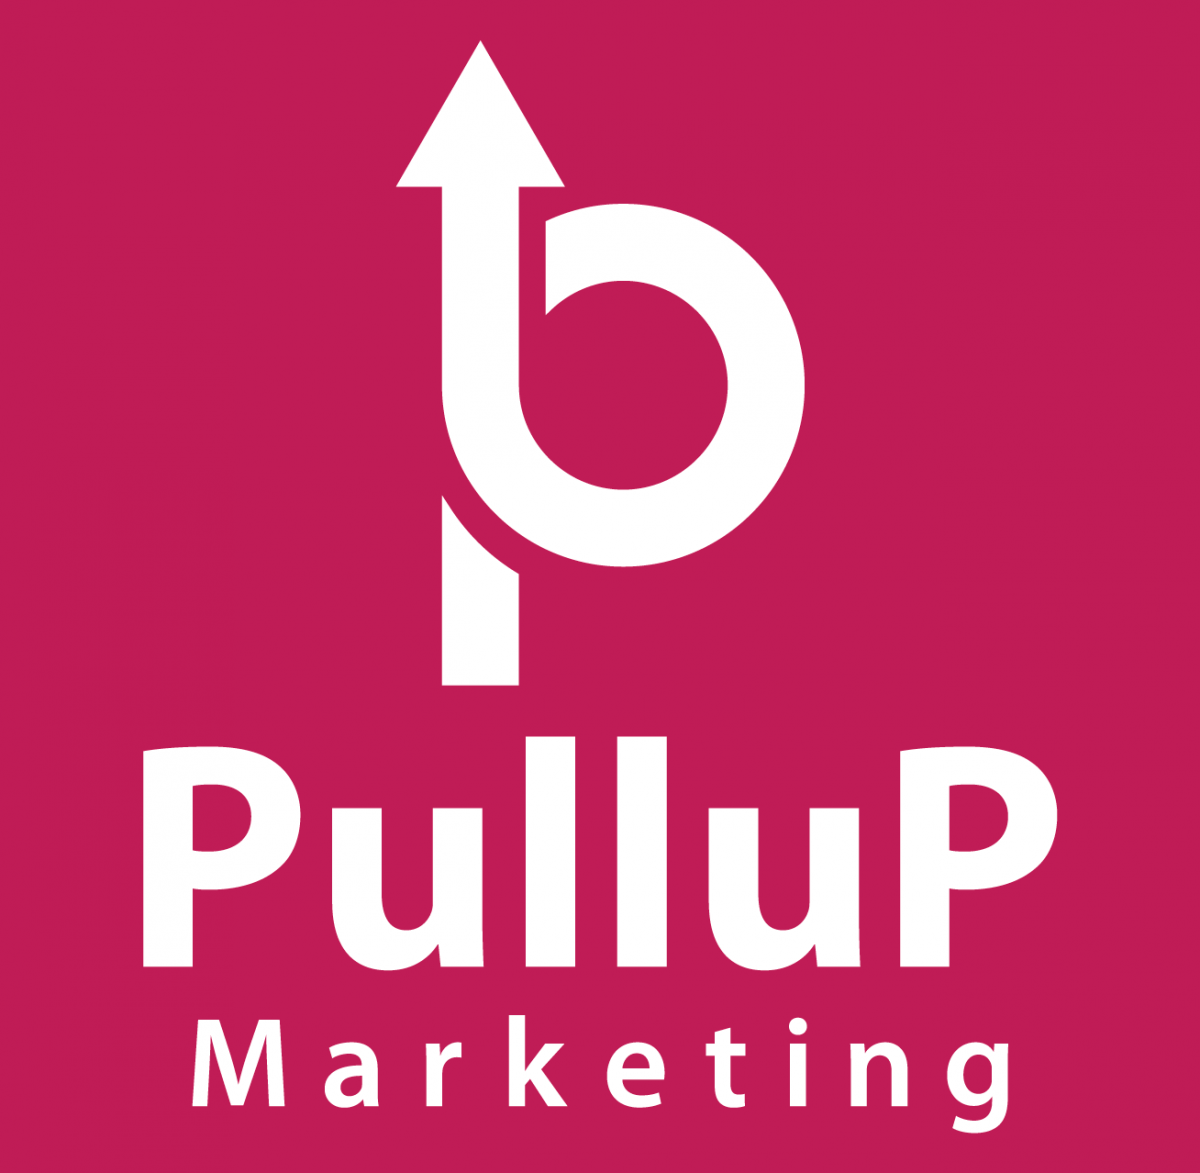 合同会社PulluP Marketing